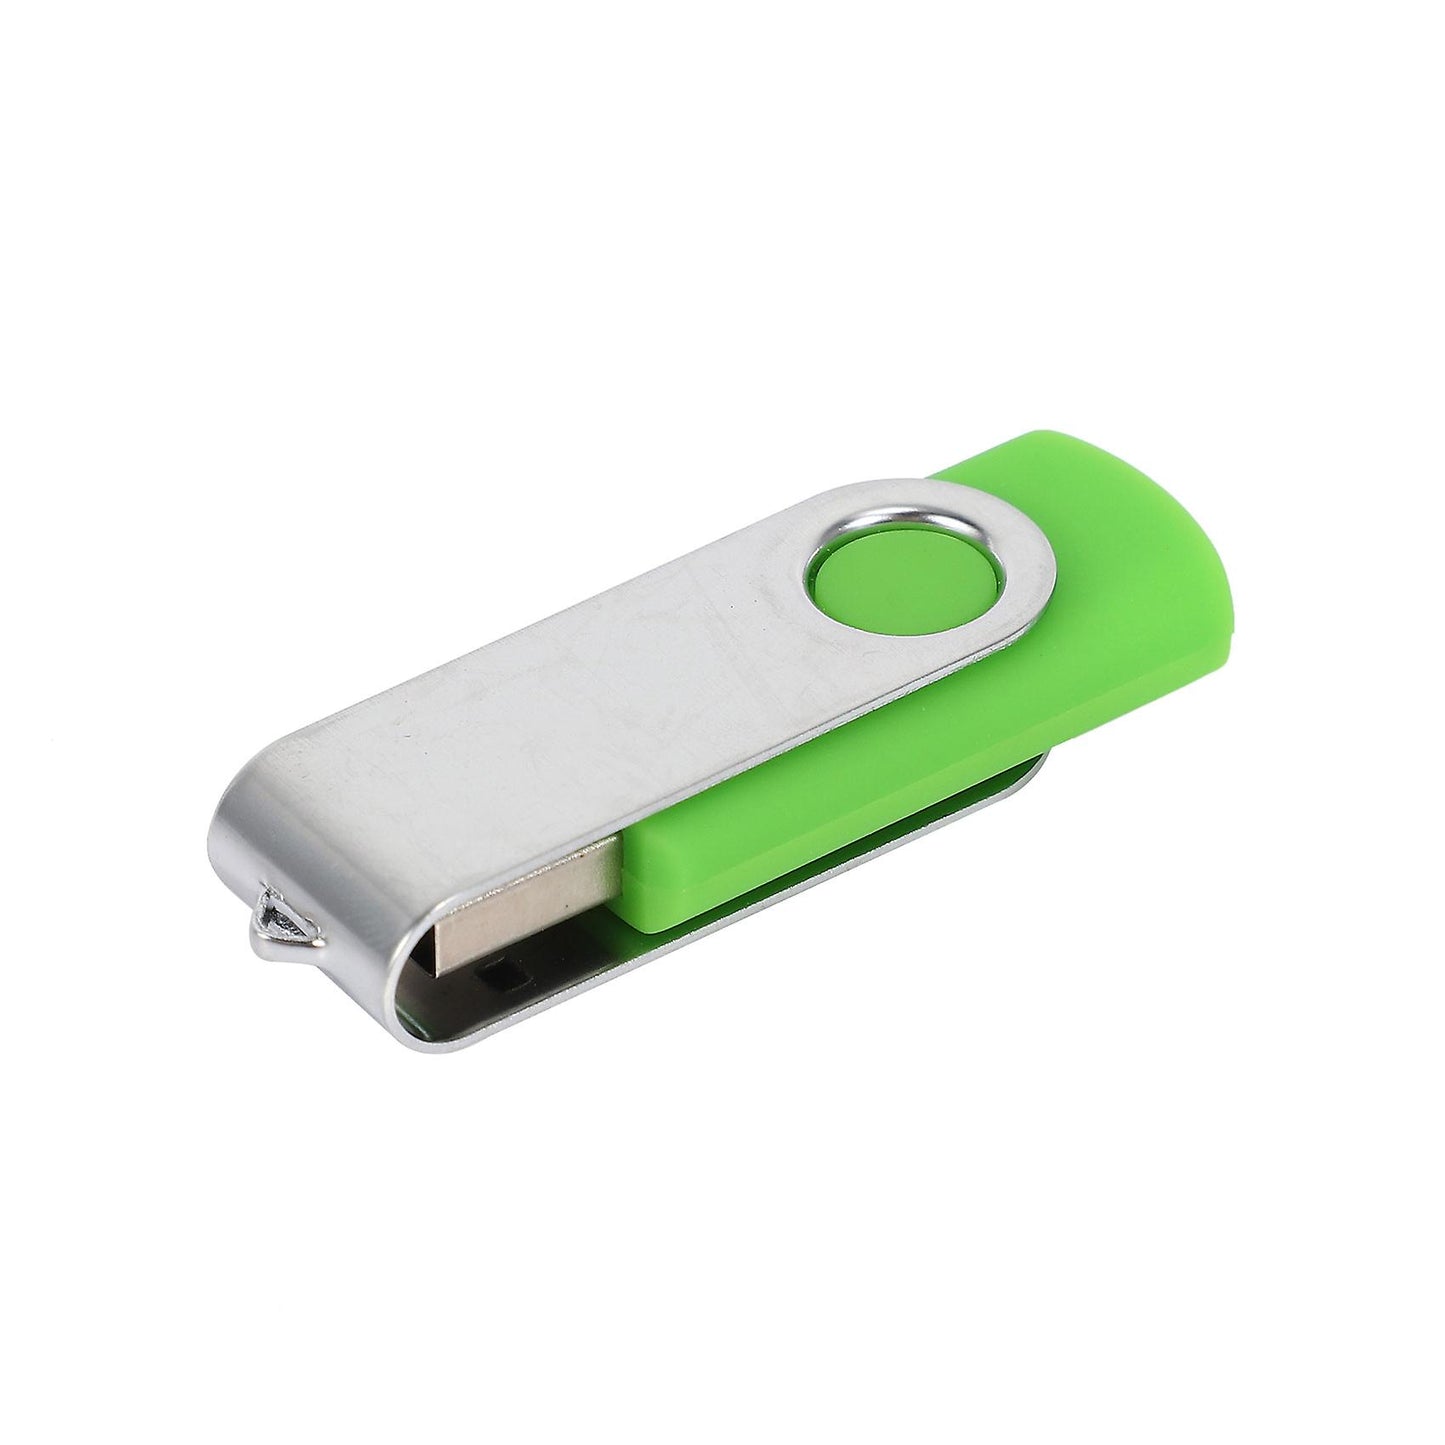 Usb Memory Stick 256GB, green